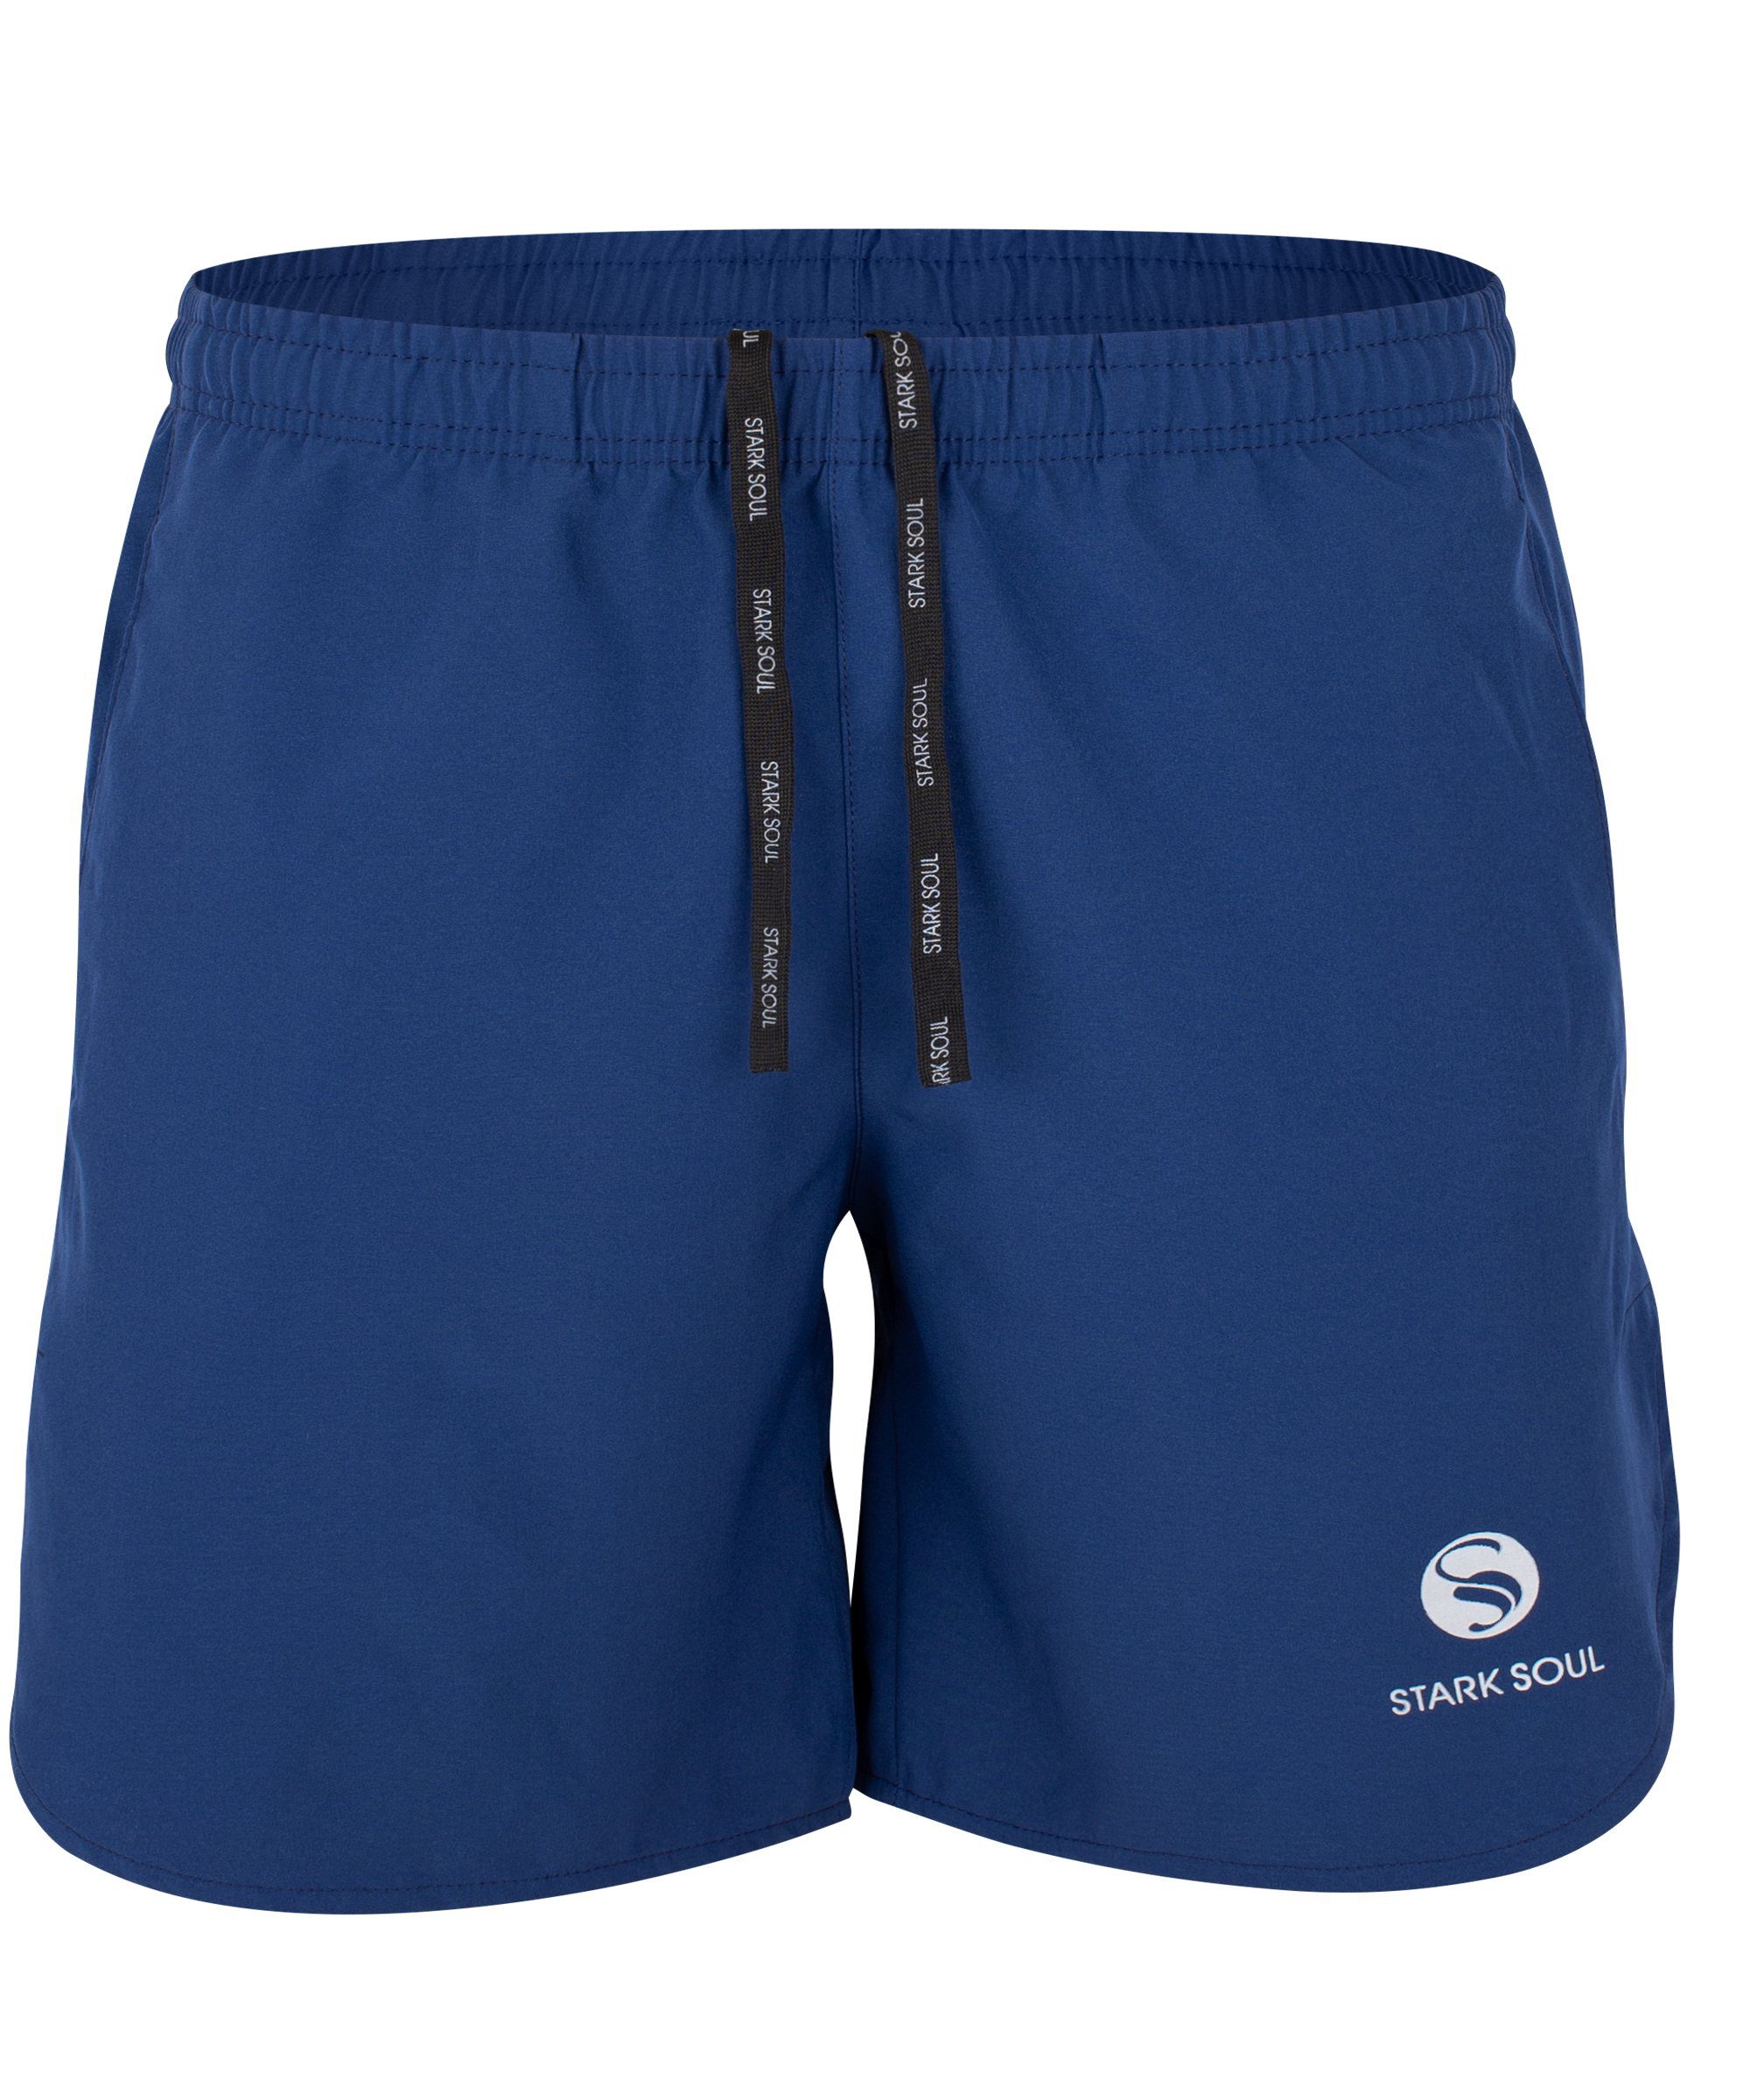 Stark Soul® Funktionshose kurze Sporthose aus Quick Dry Material - Schnelltrocknend Marineblau